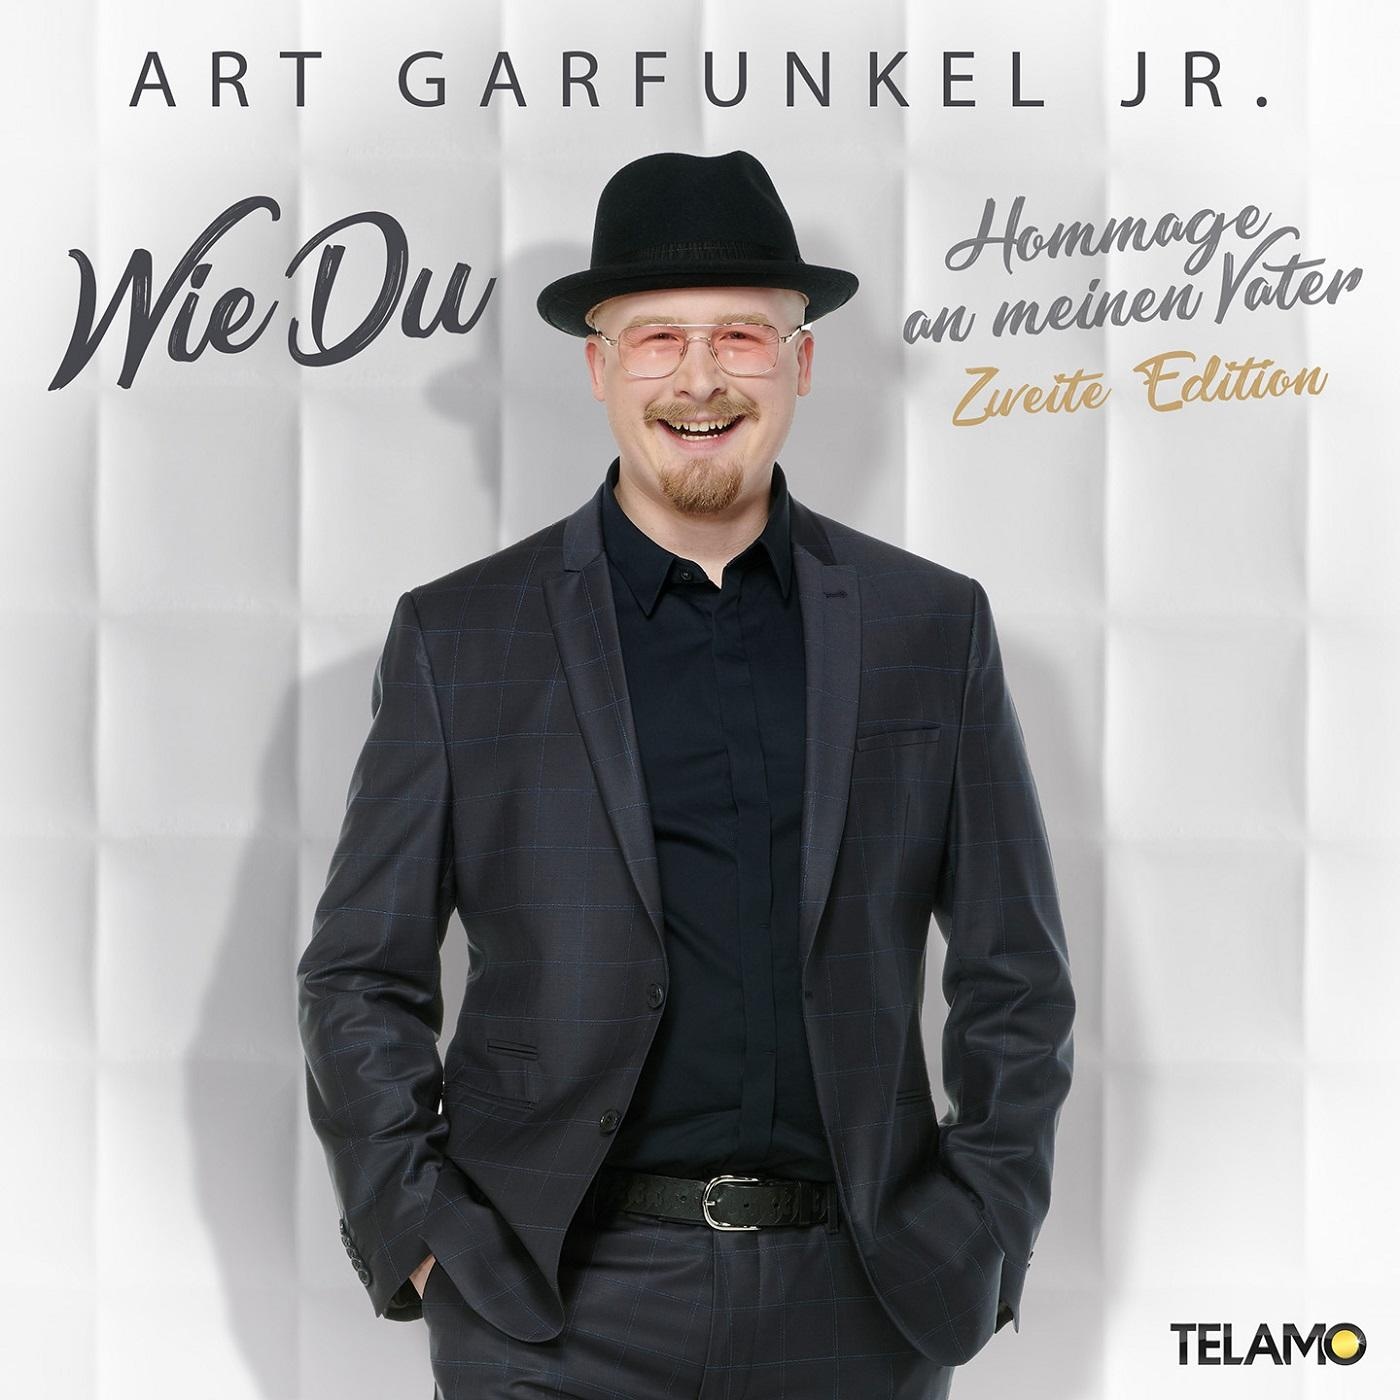 Jr. (CD) - Edition) - Du-Hommage Art meinen Vater(Zweite Wie Garfunkel an